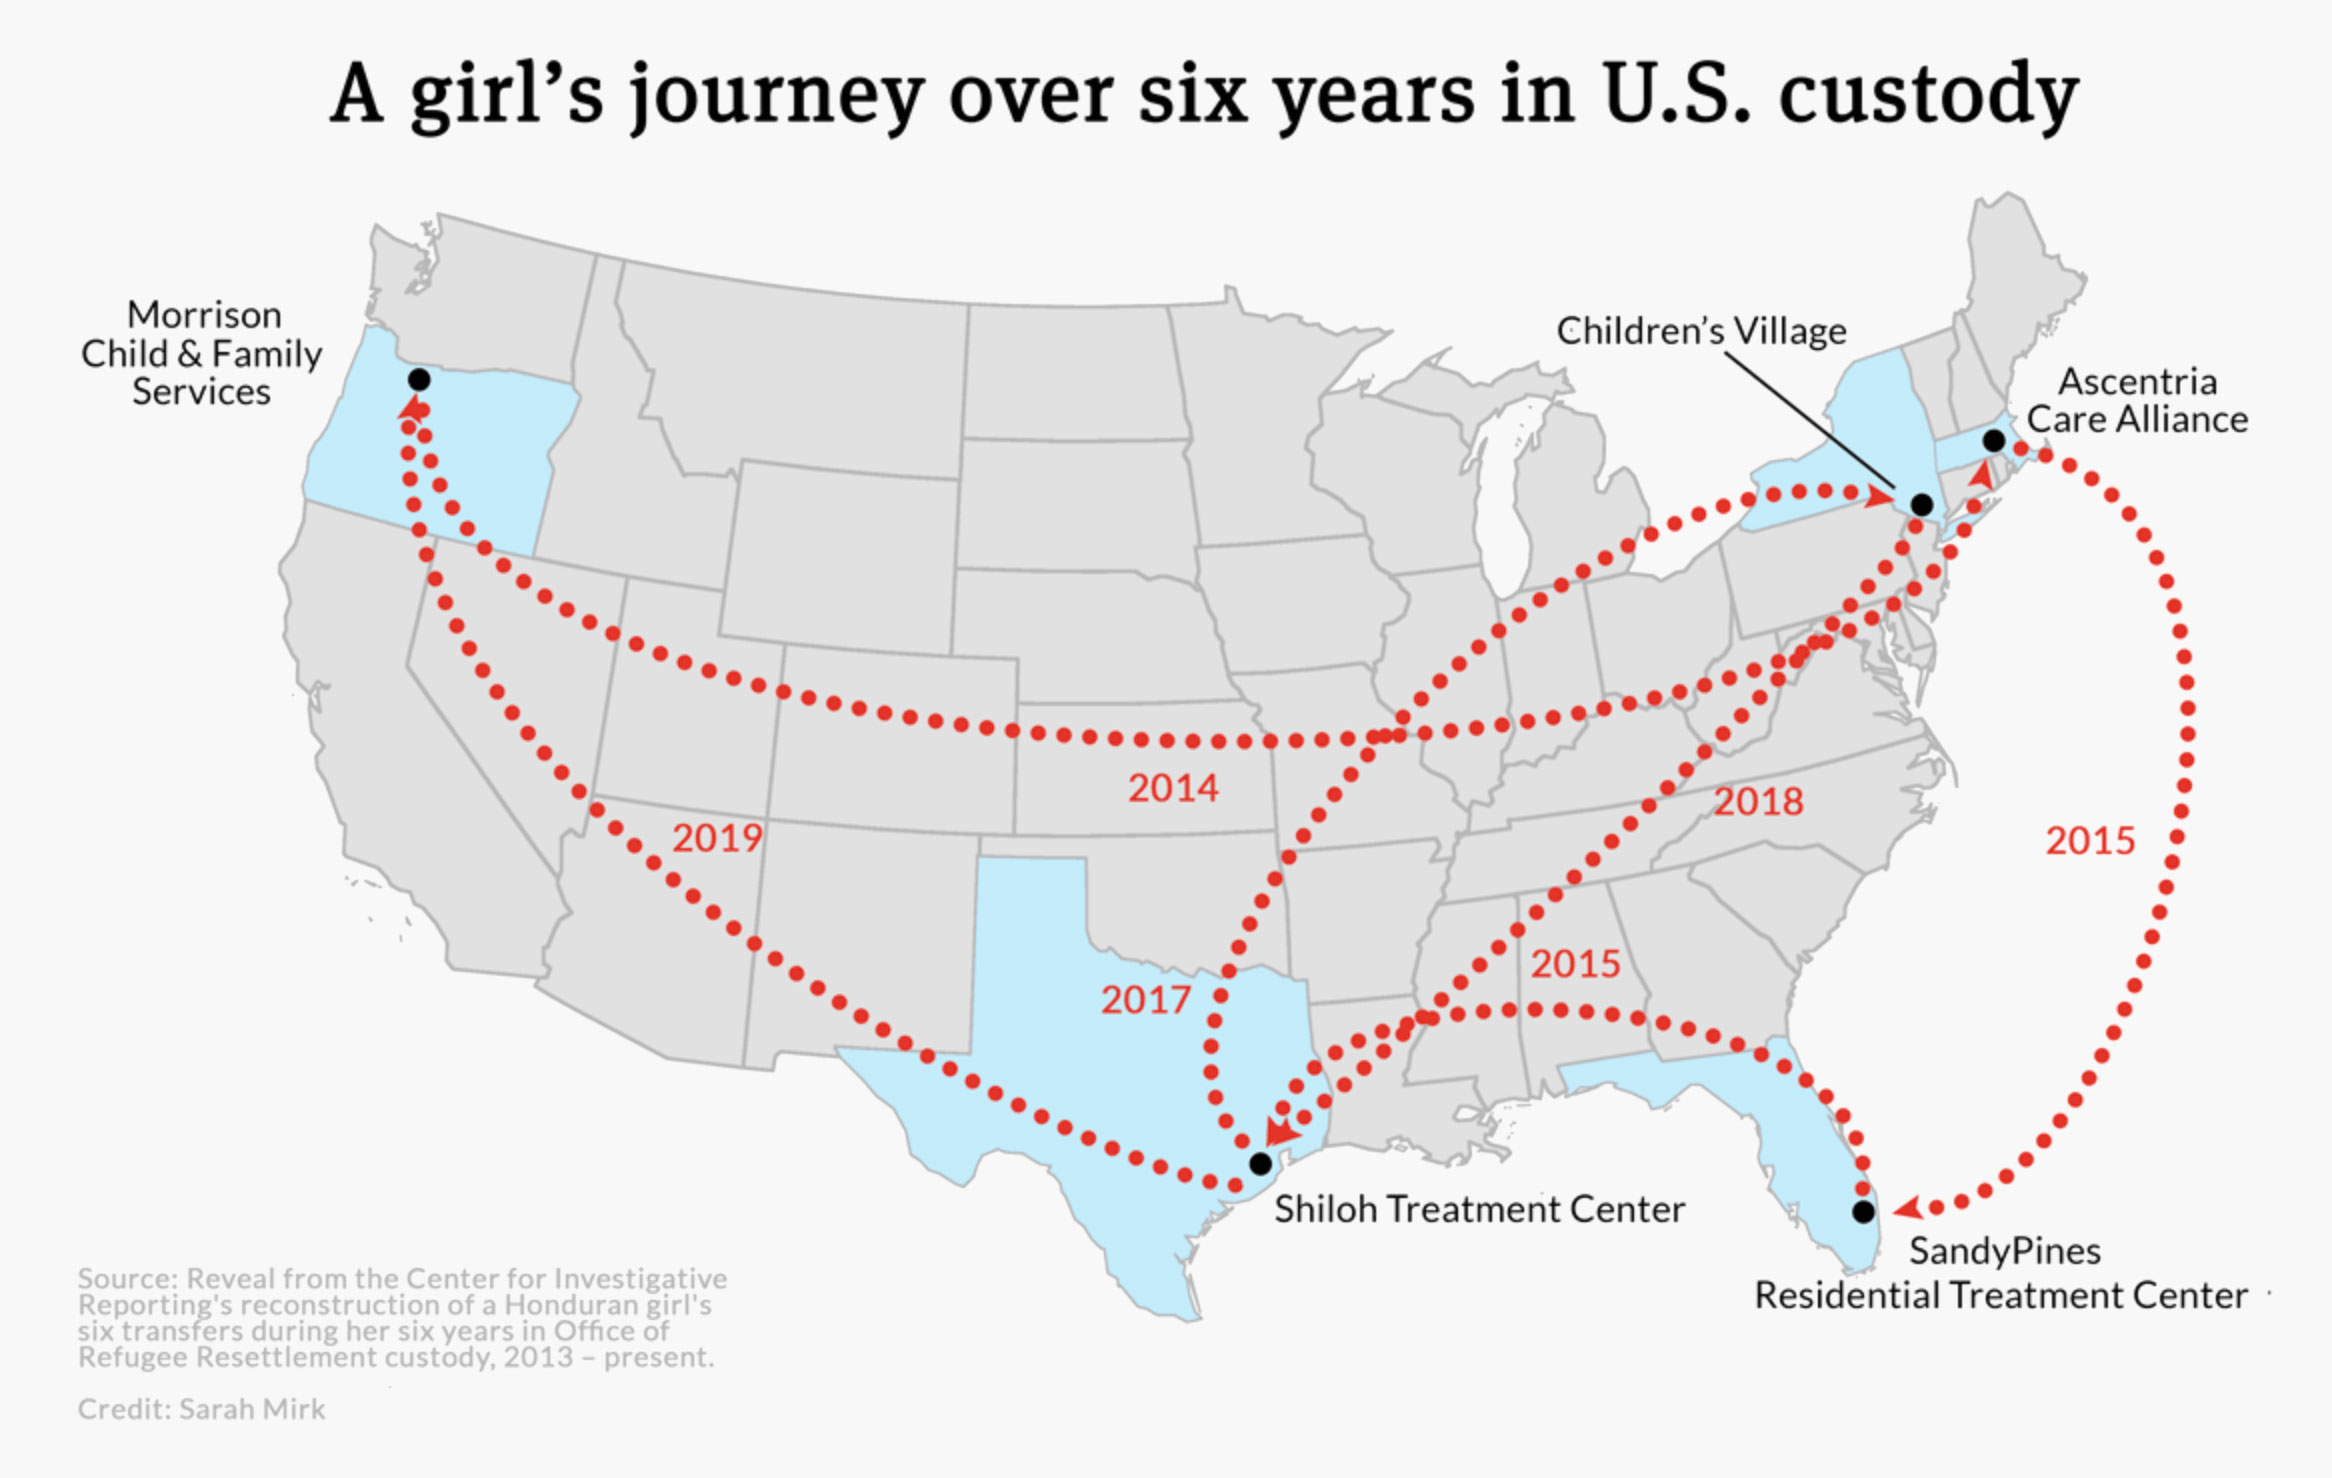 A girl's journey over six years in U.S. custody